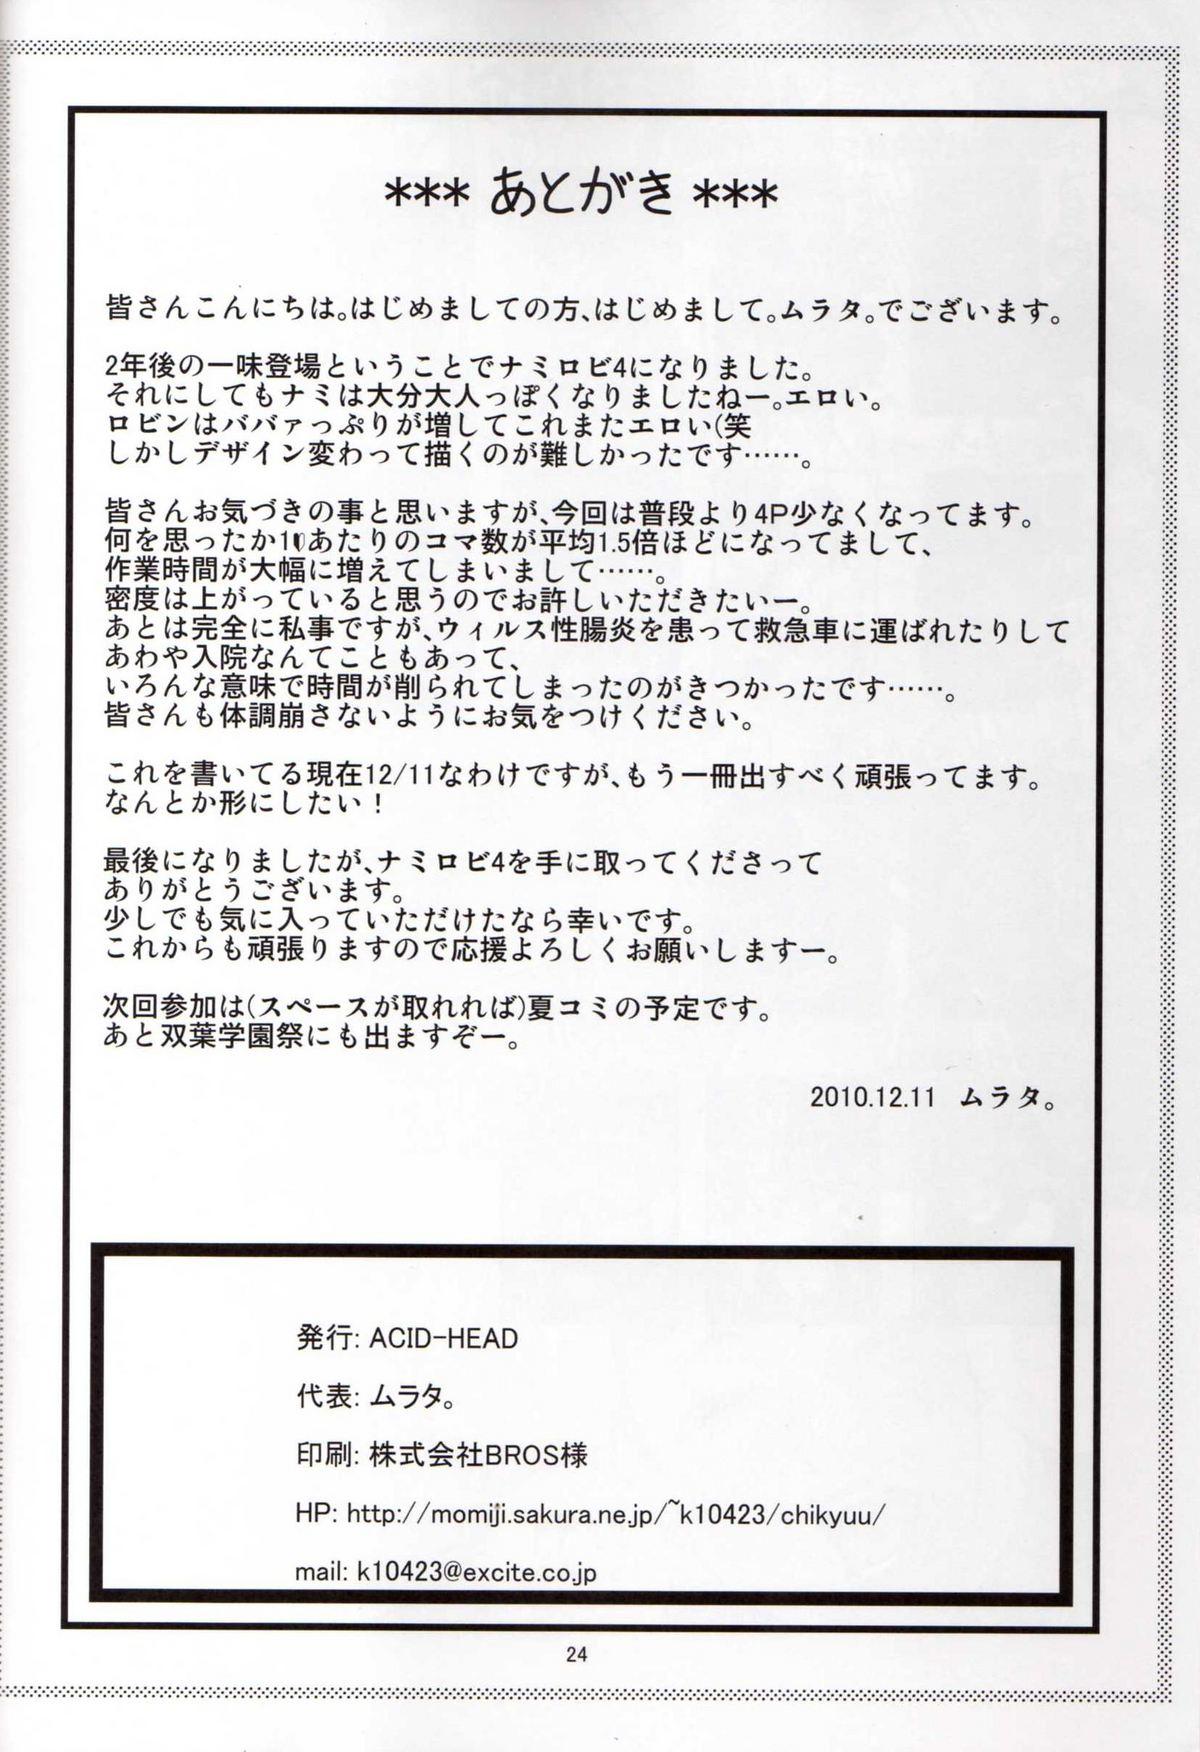 Furry NamiRobi 4 - One piece Namorada - Page 25